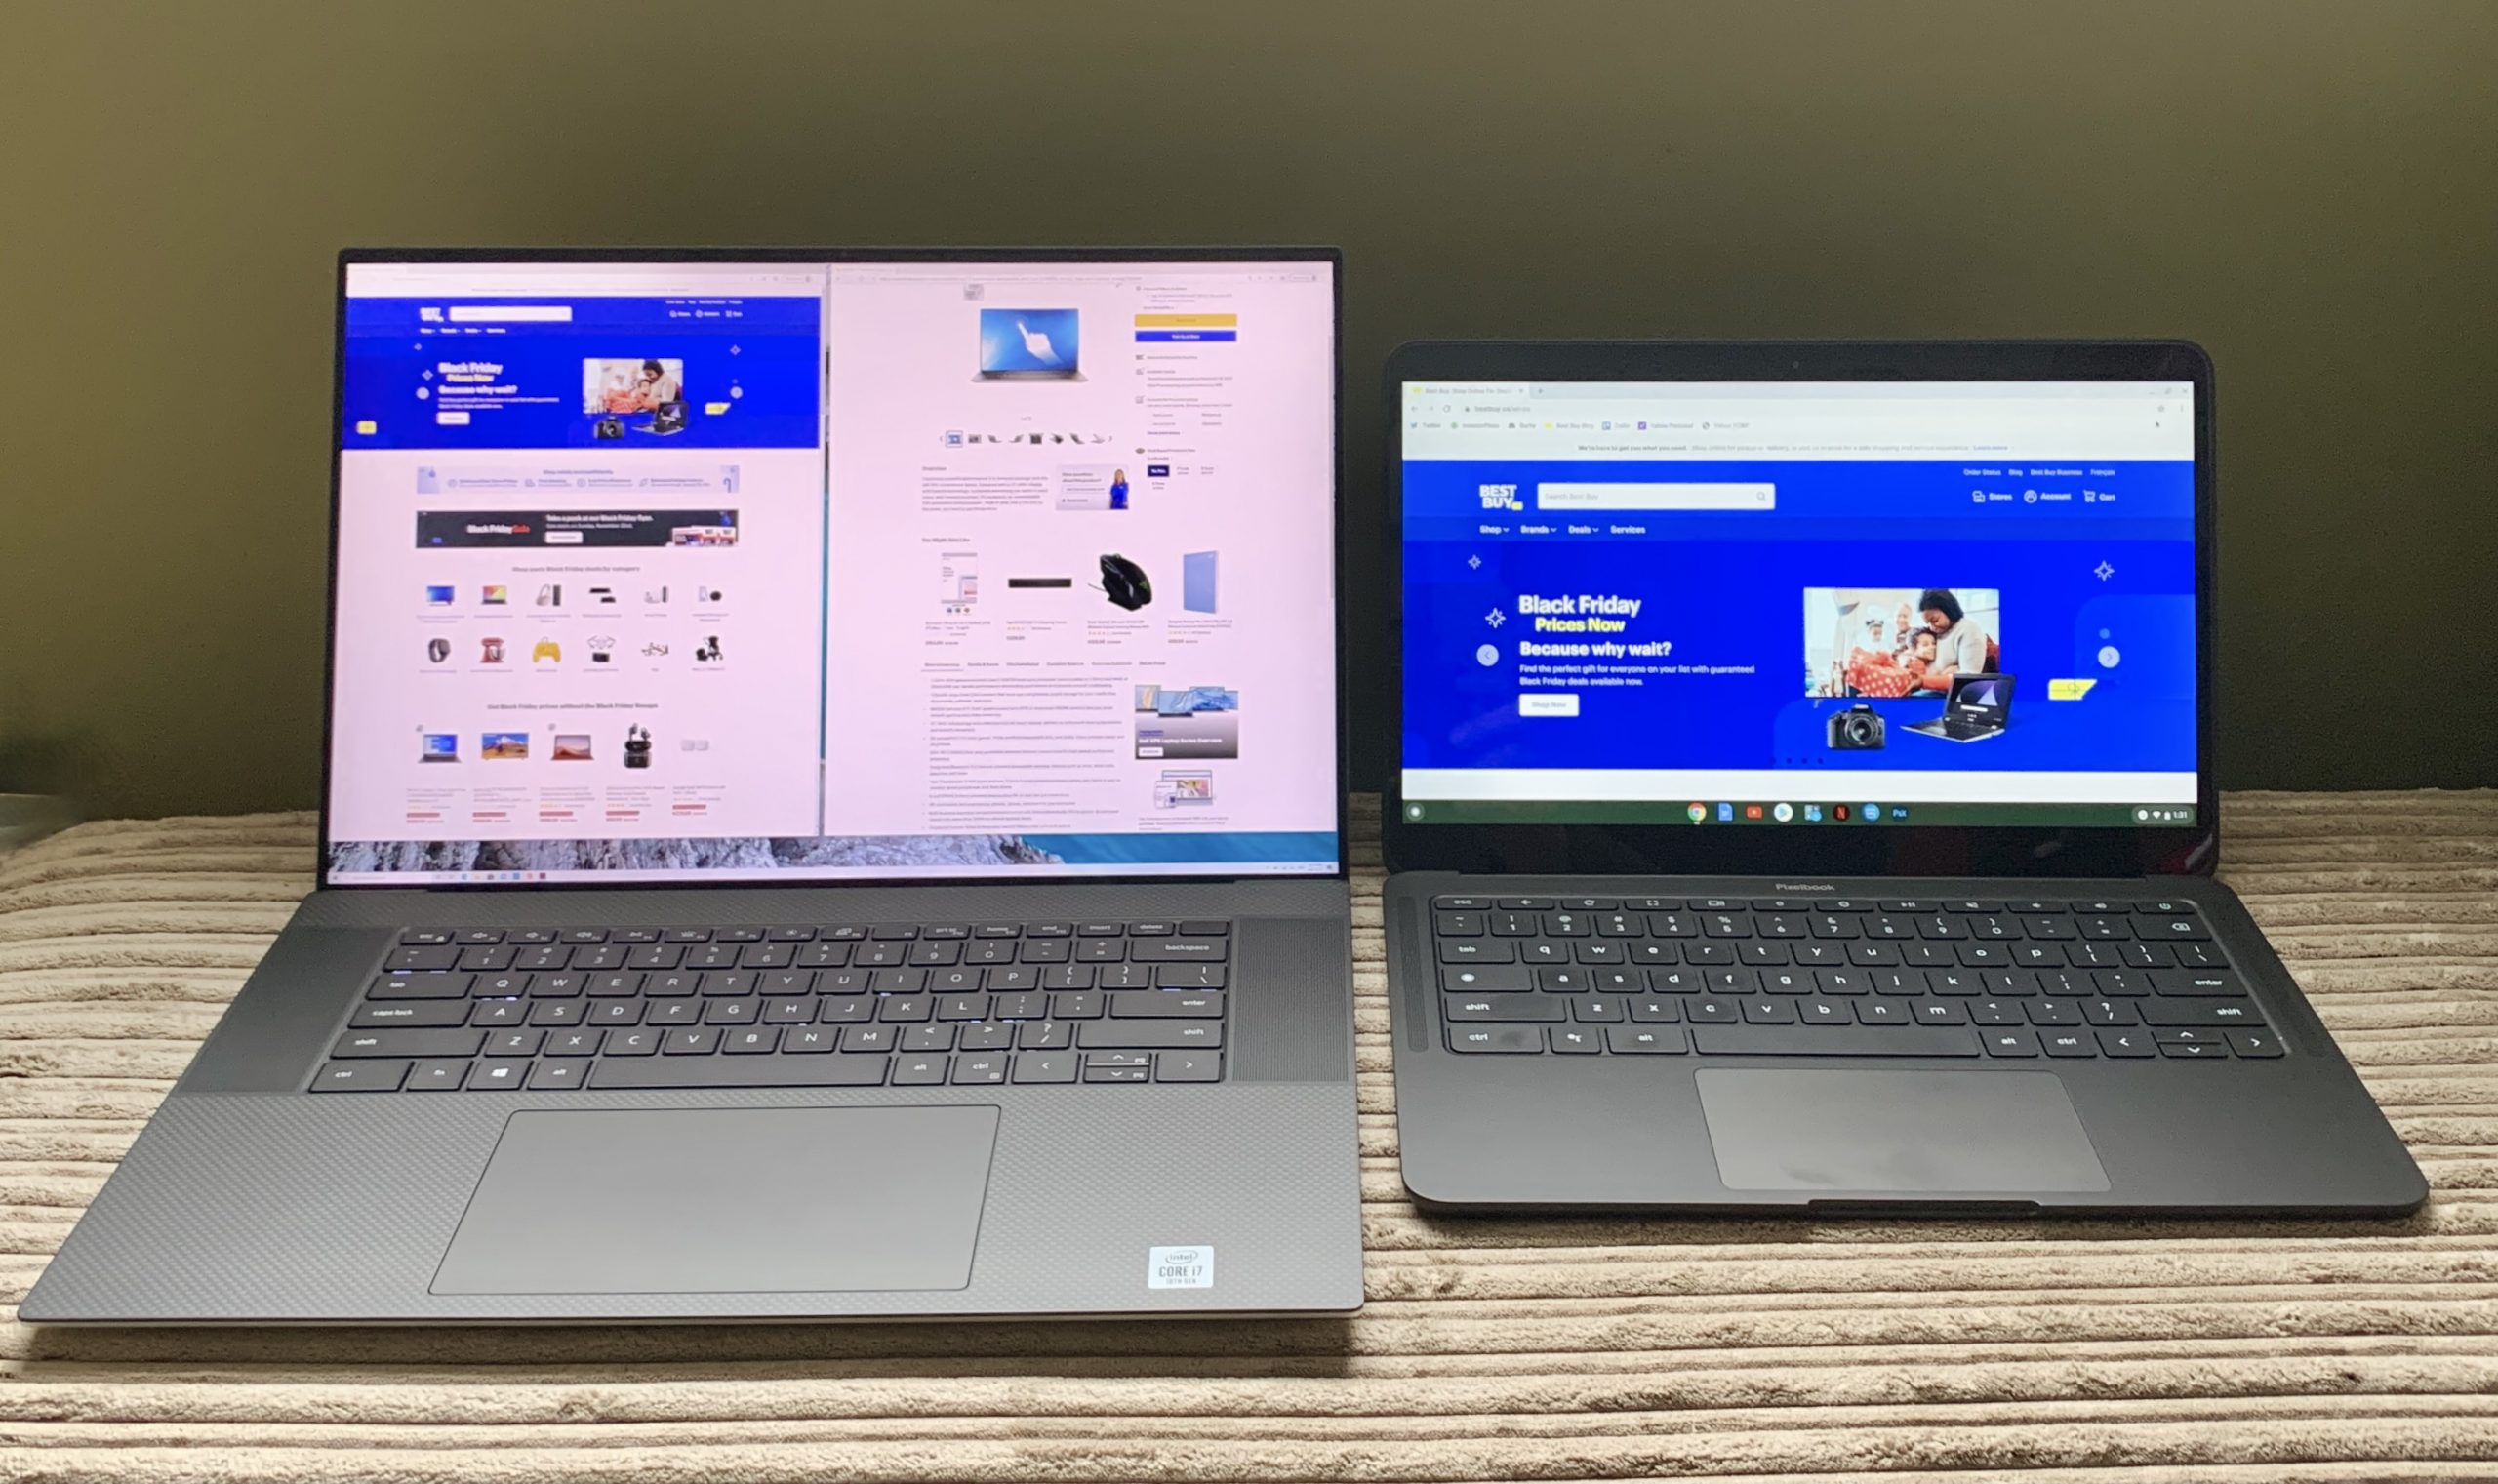 4K Display vs. a Non 4K Laptop Display